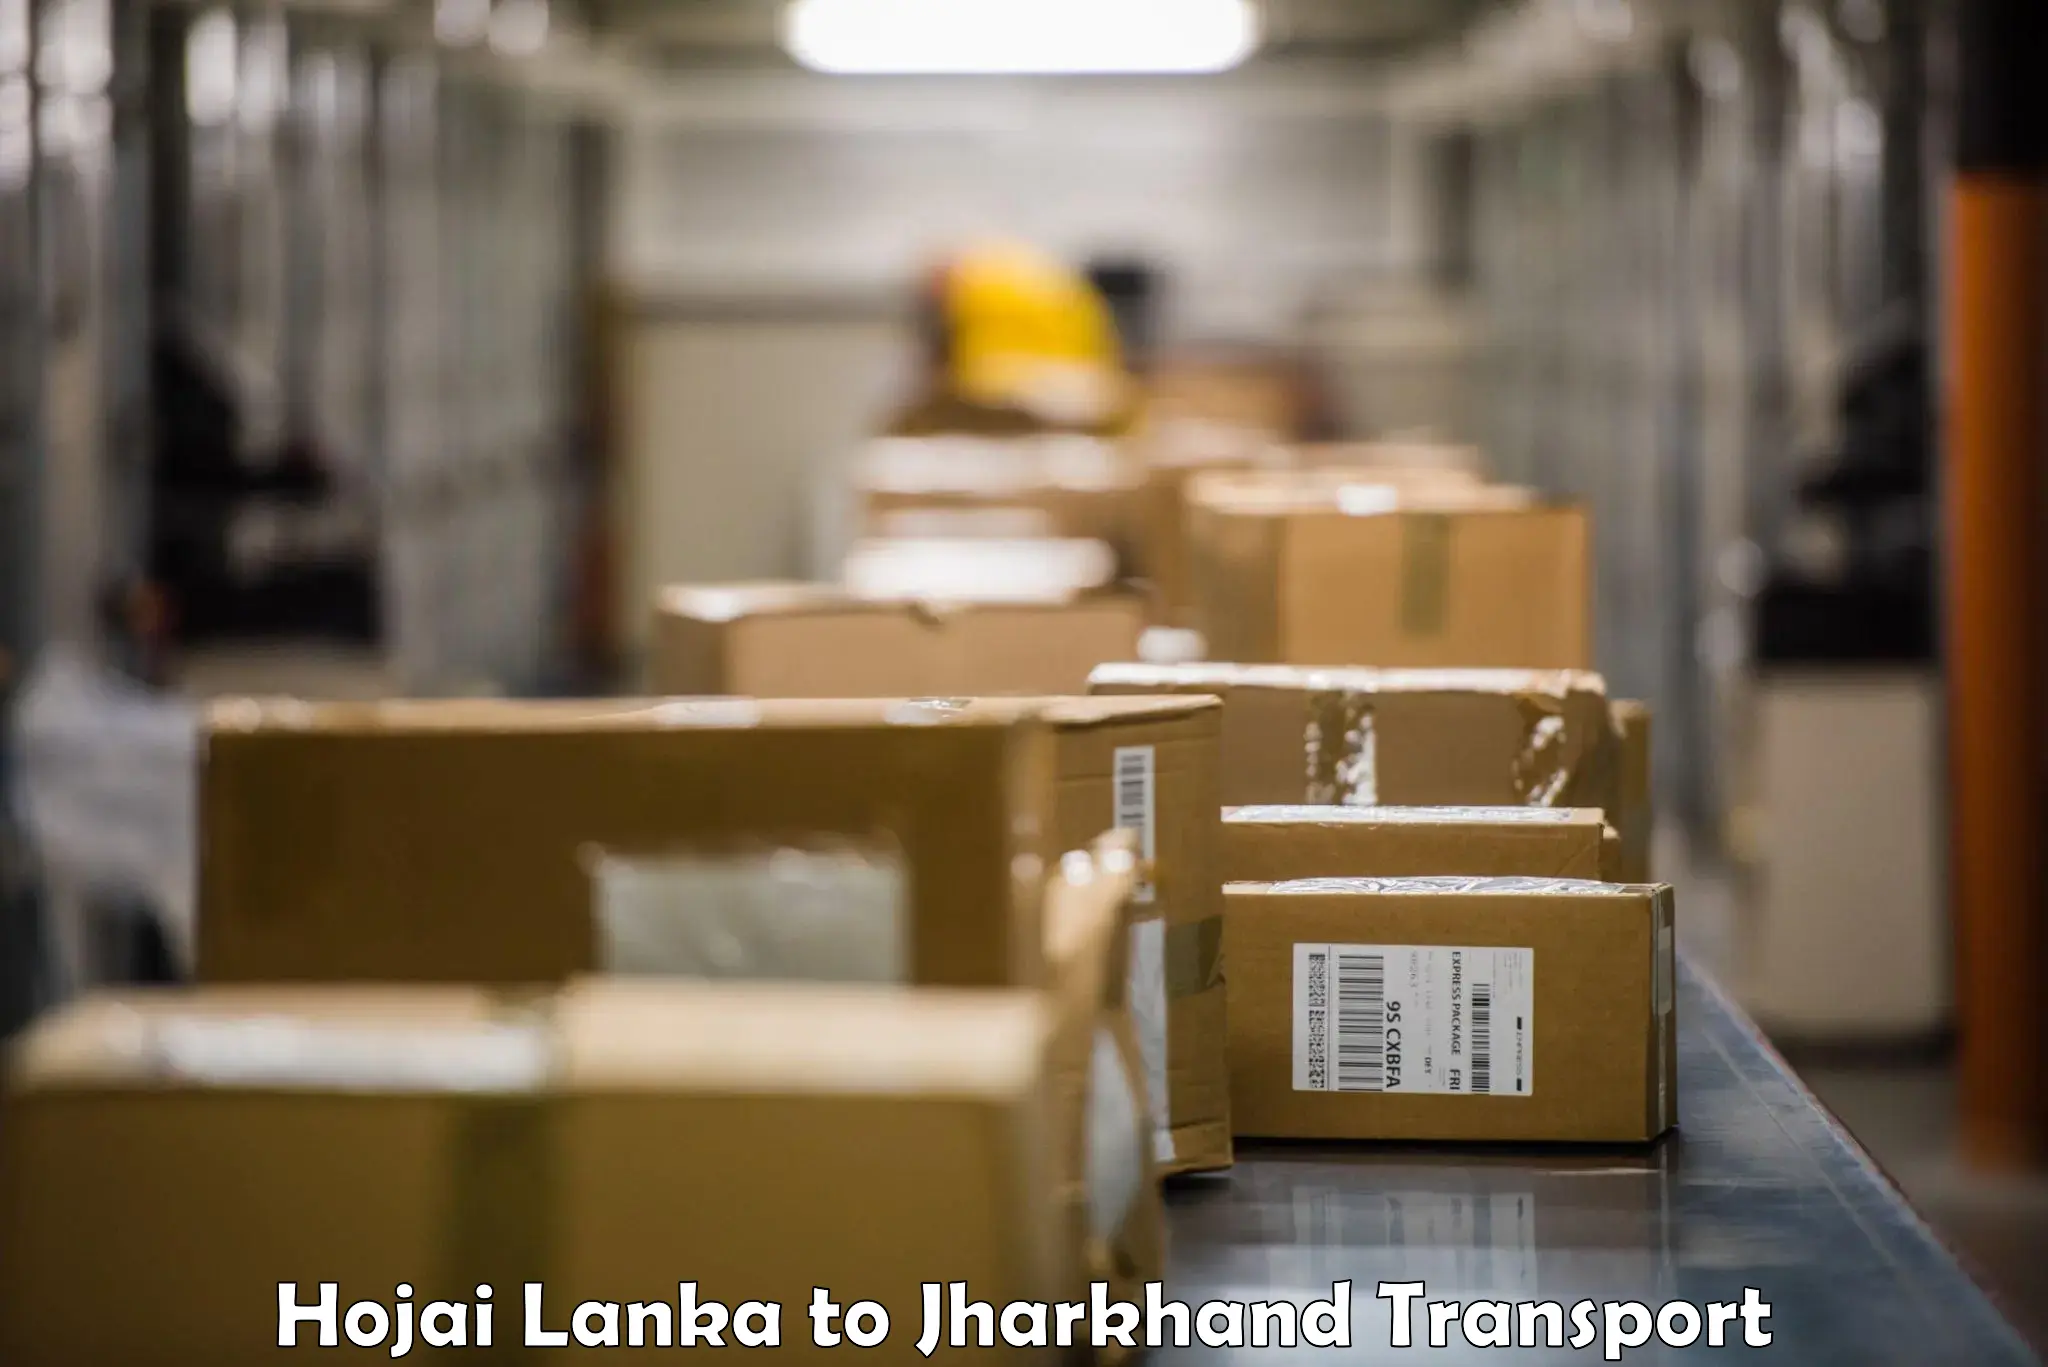 Express transport services Hojai Lanka to Padma Hazaribagh